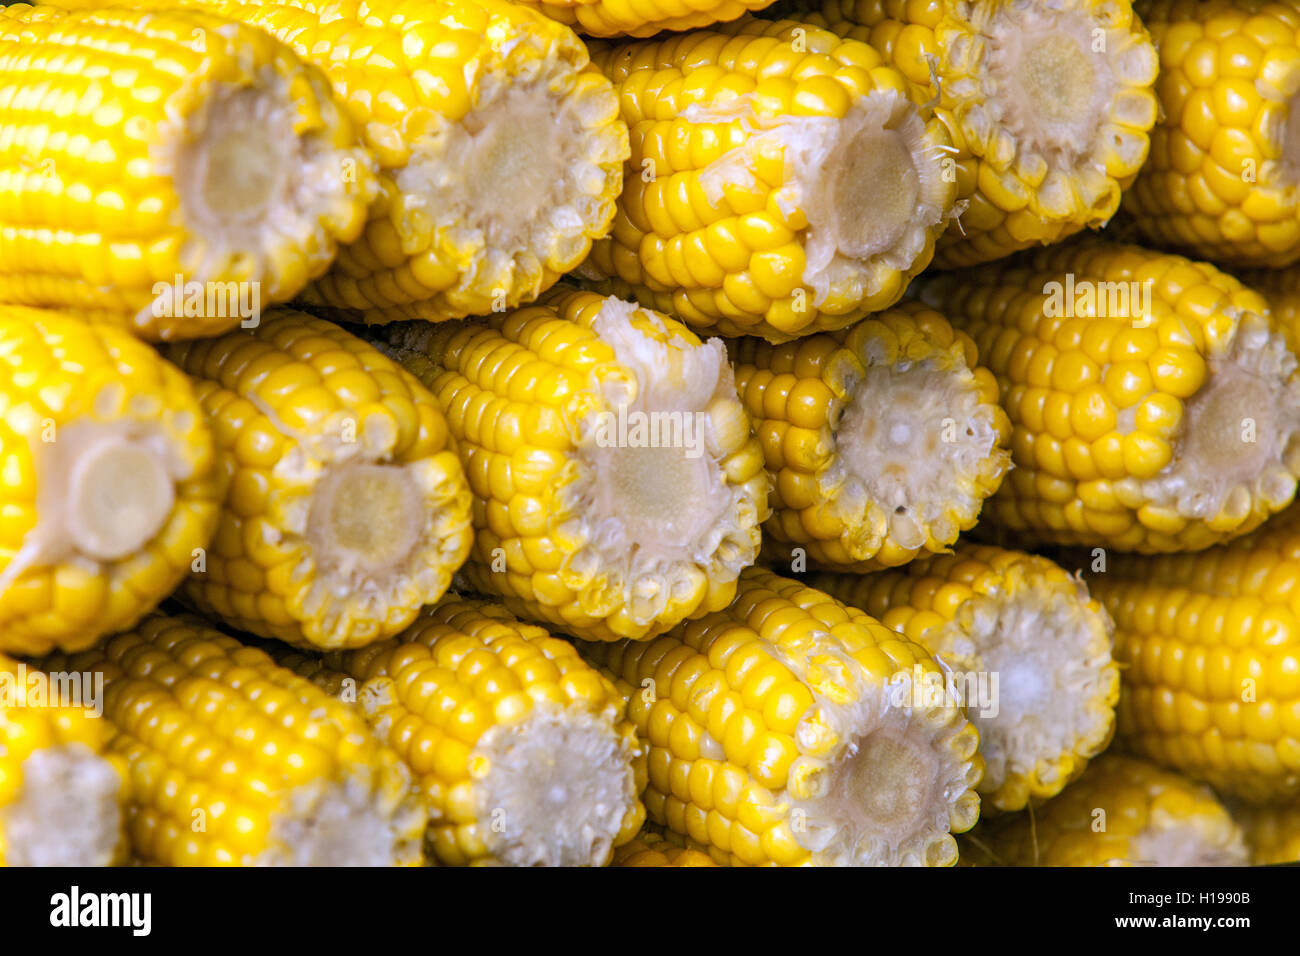 mais sulla pannocchia, pannocchie di mais bollite Foto Stock